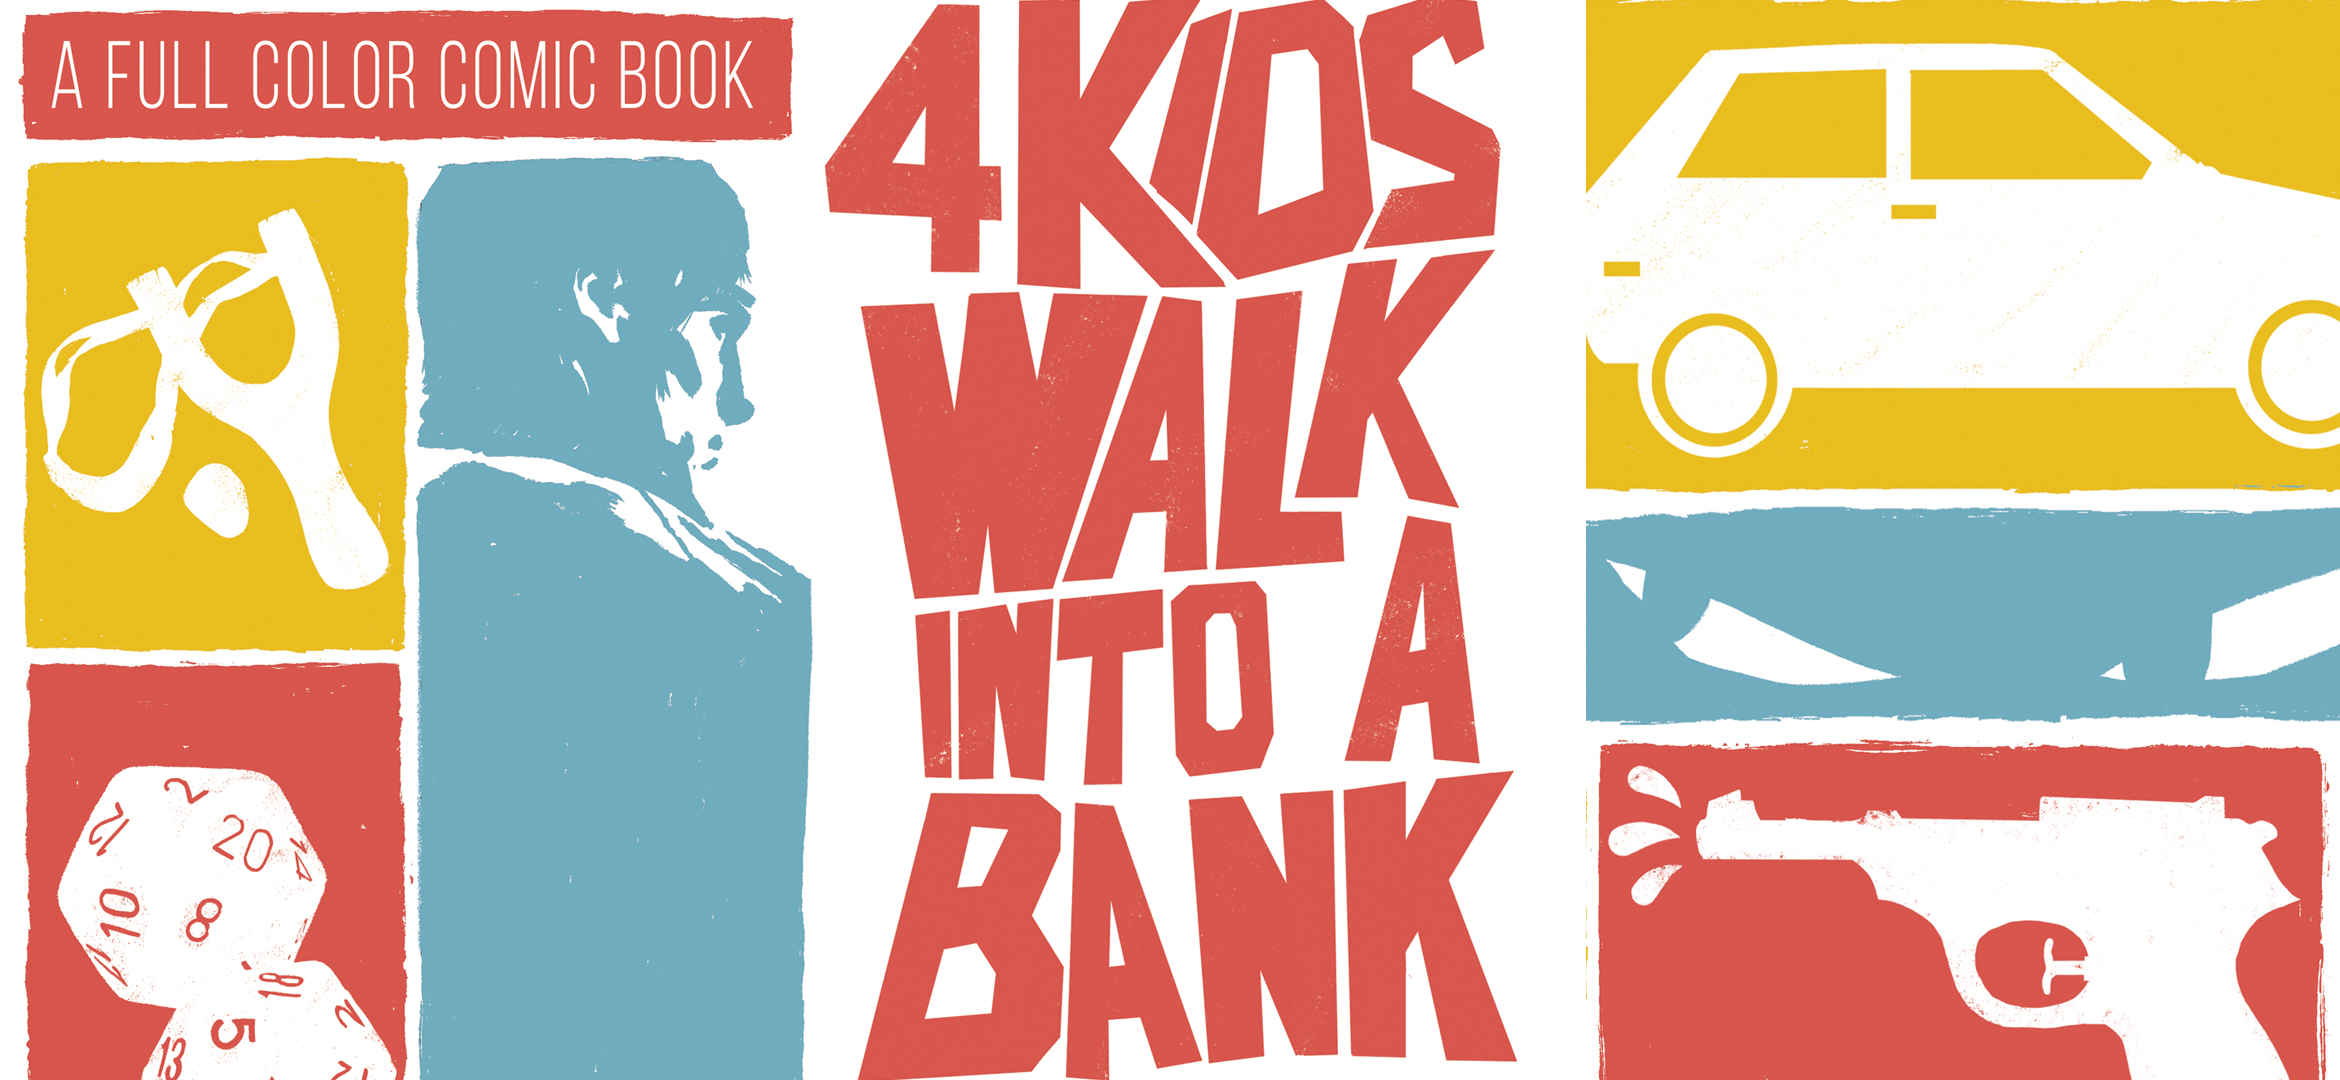 4 Kids Walk into a Bank #1 BeachBum Comics/JJ's Comic & Art Exclusive